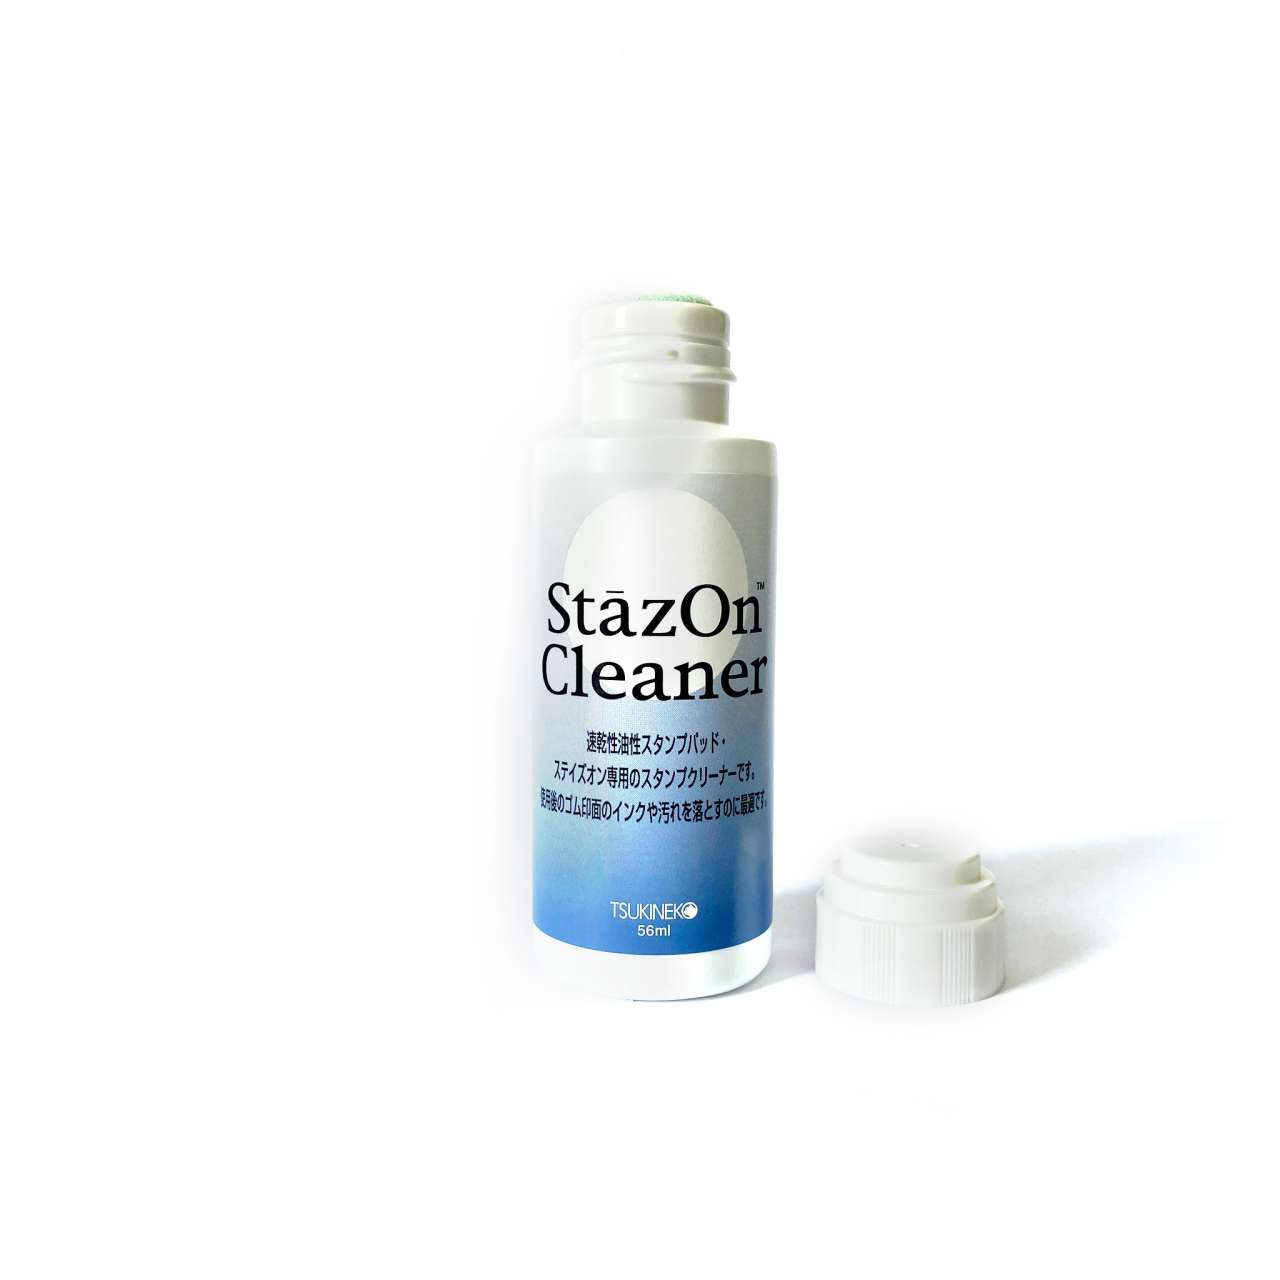 StazOn All-Purpose Stamp Cleaner Spray 2 oz